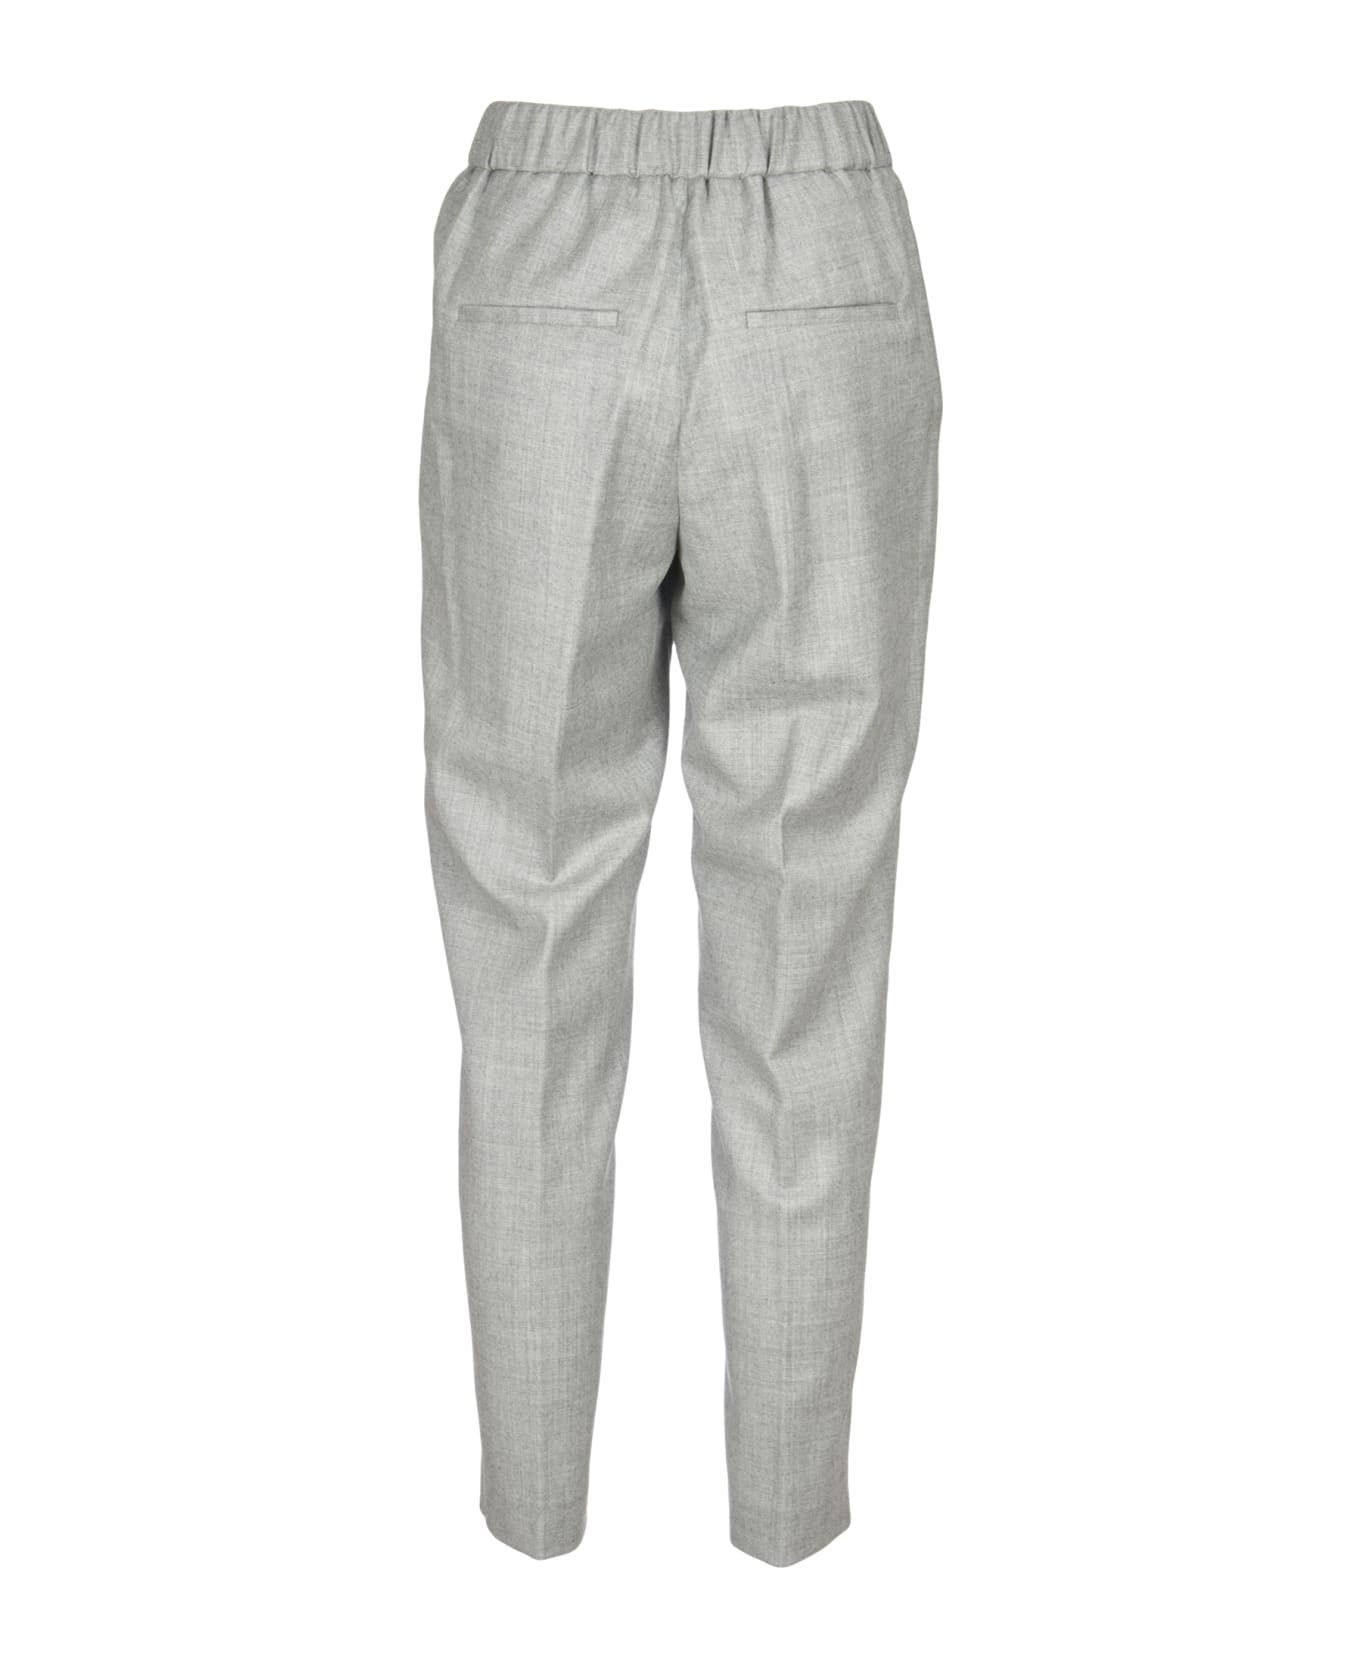 Peserico Trousers - Grey